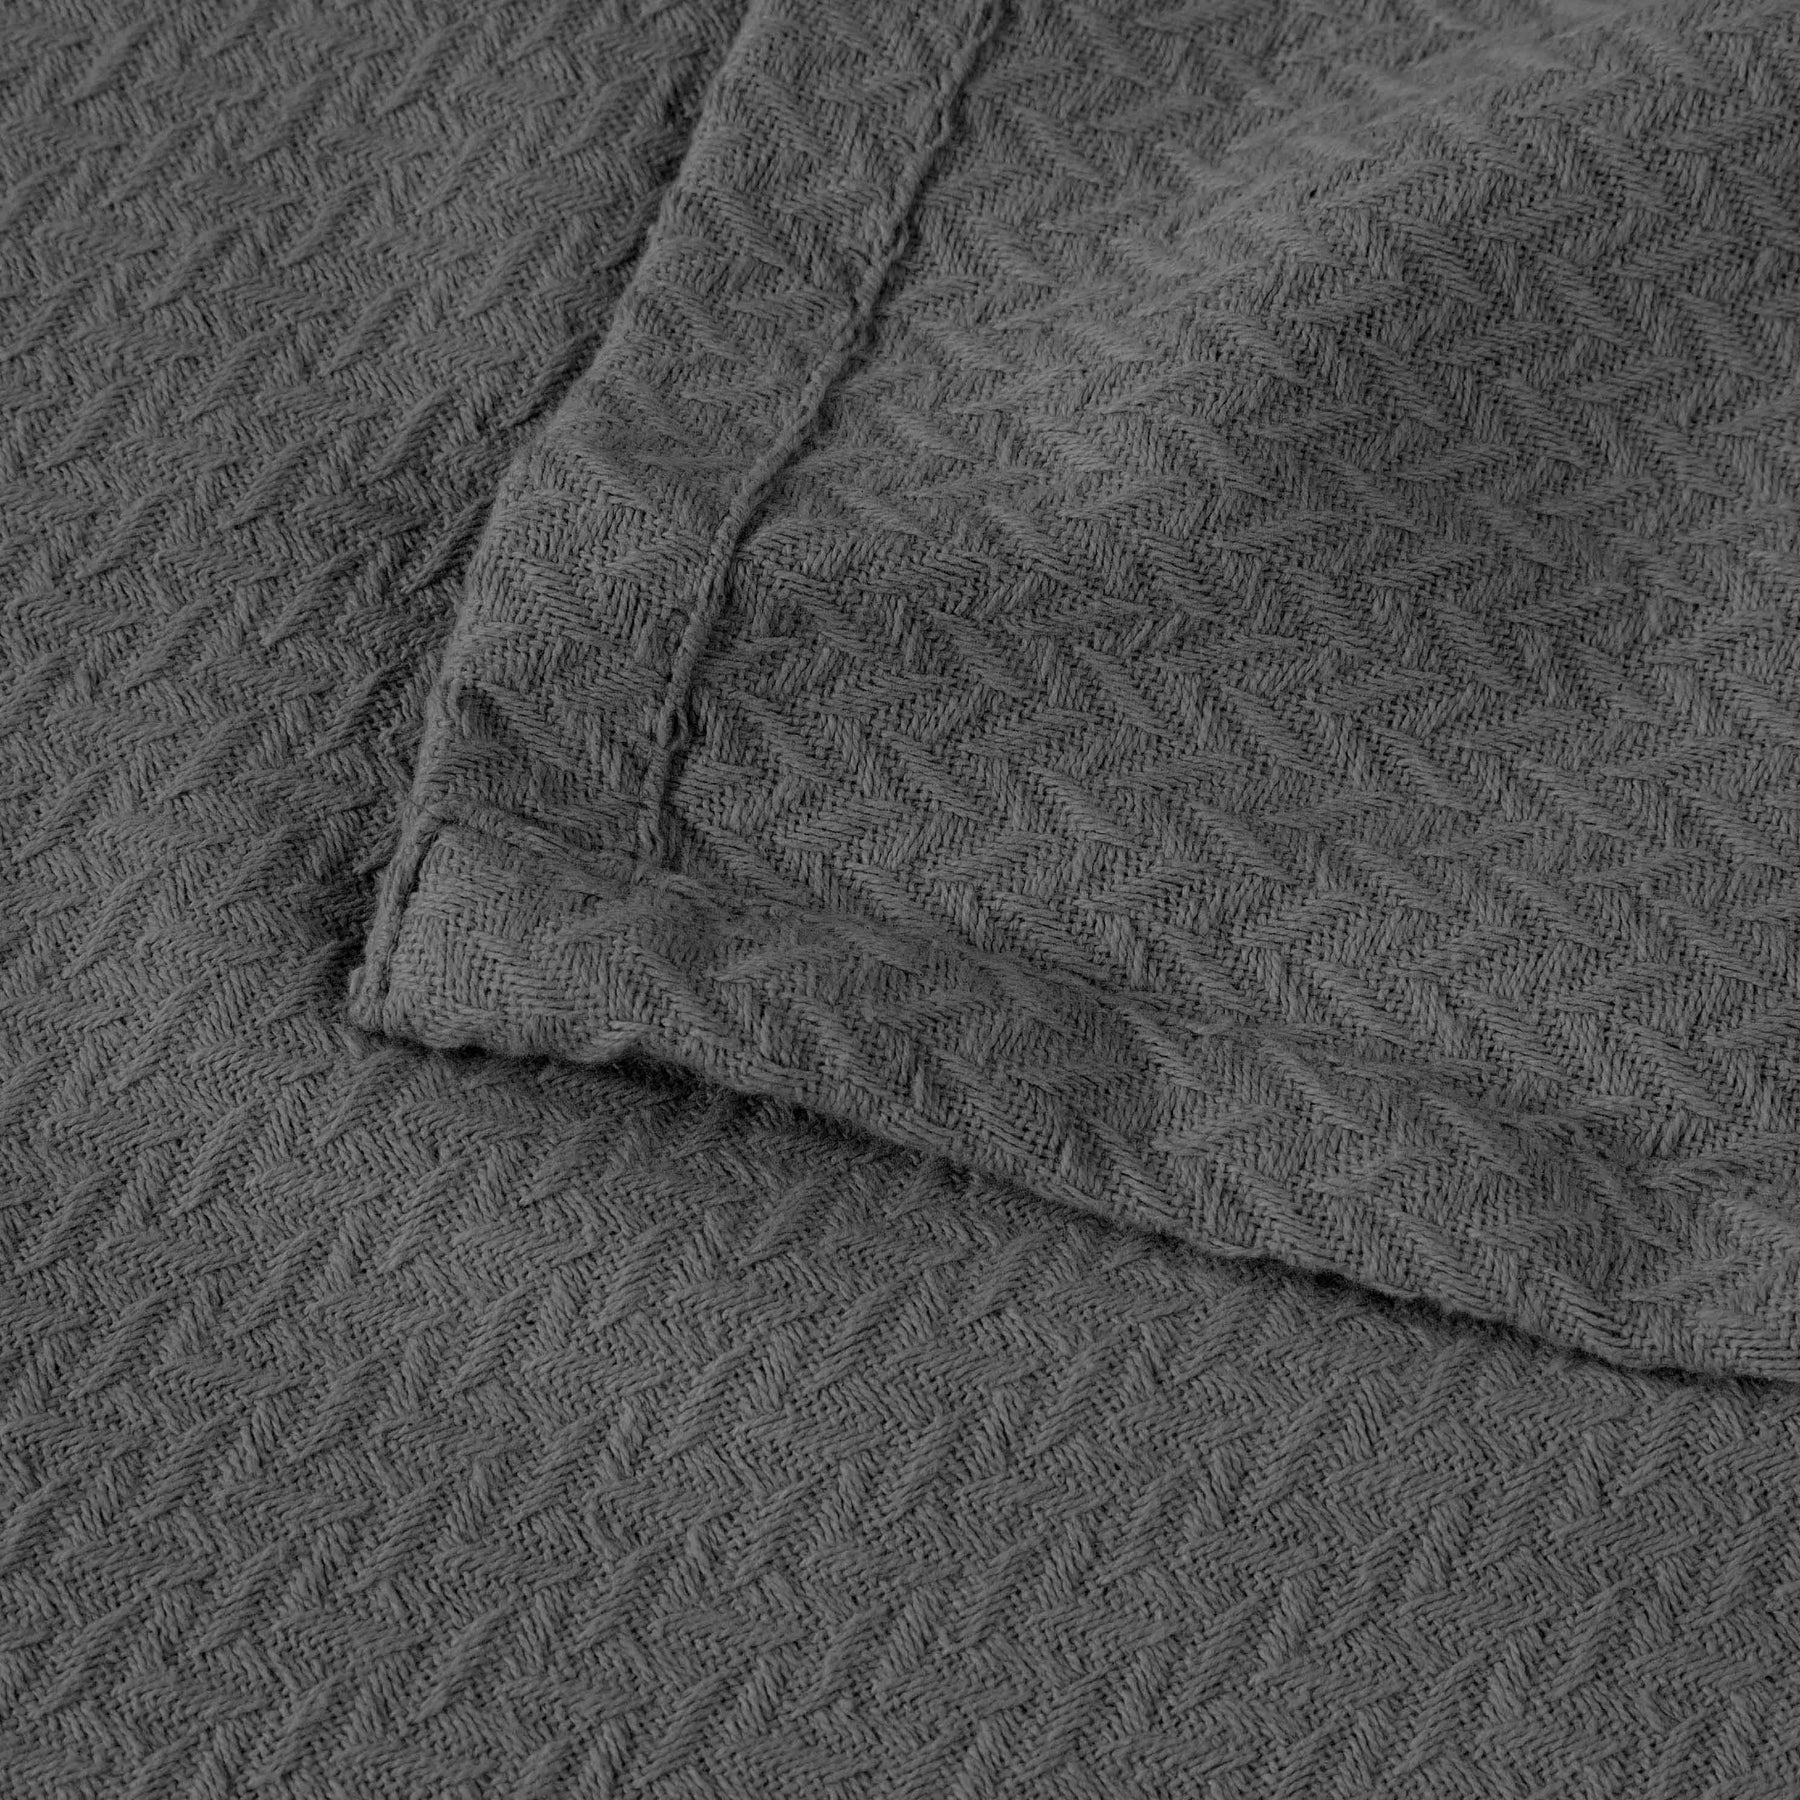 Nobel Cotton Textured Jacquard Chevron Lightweight Woven Blanket - Charcoal